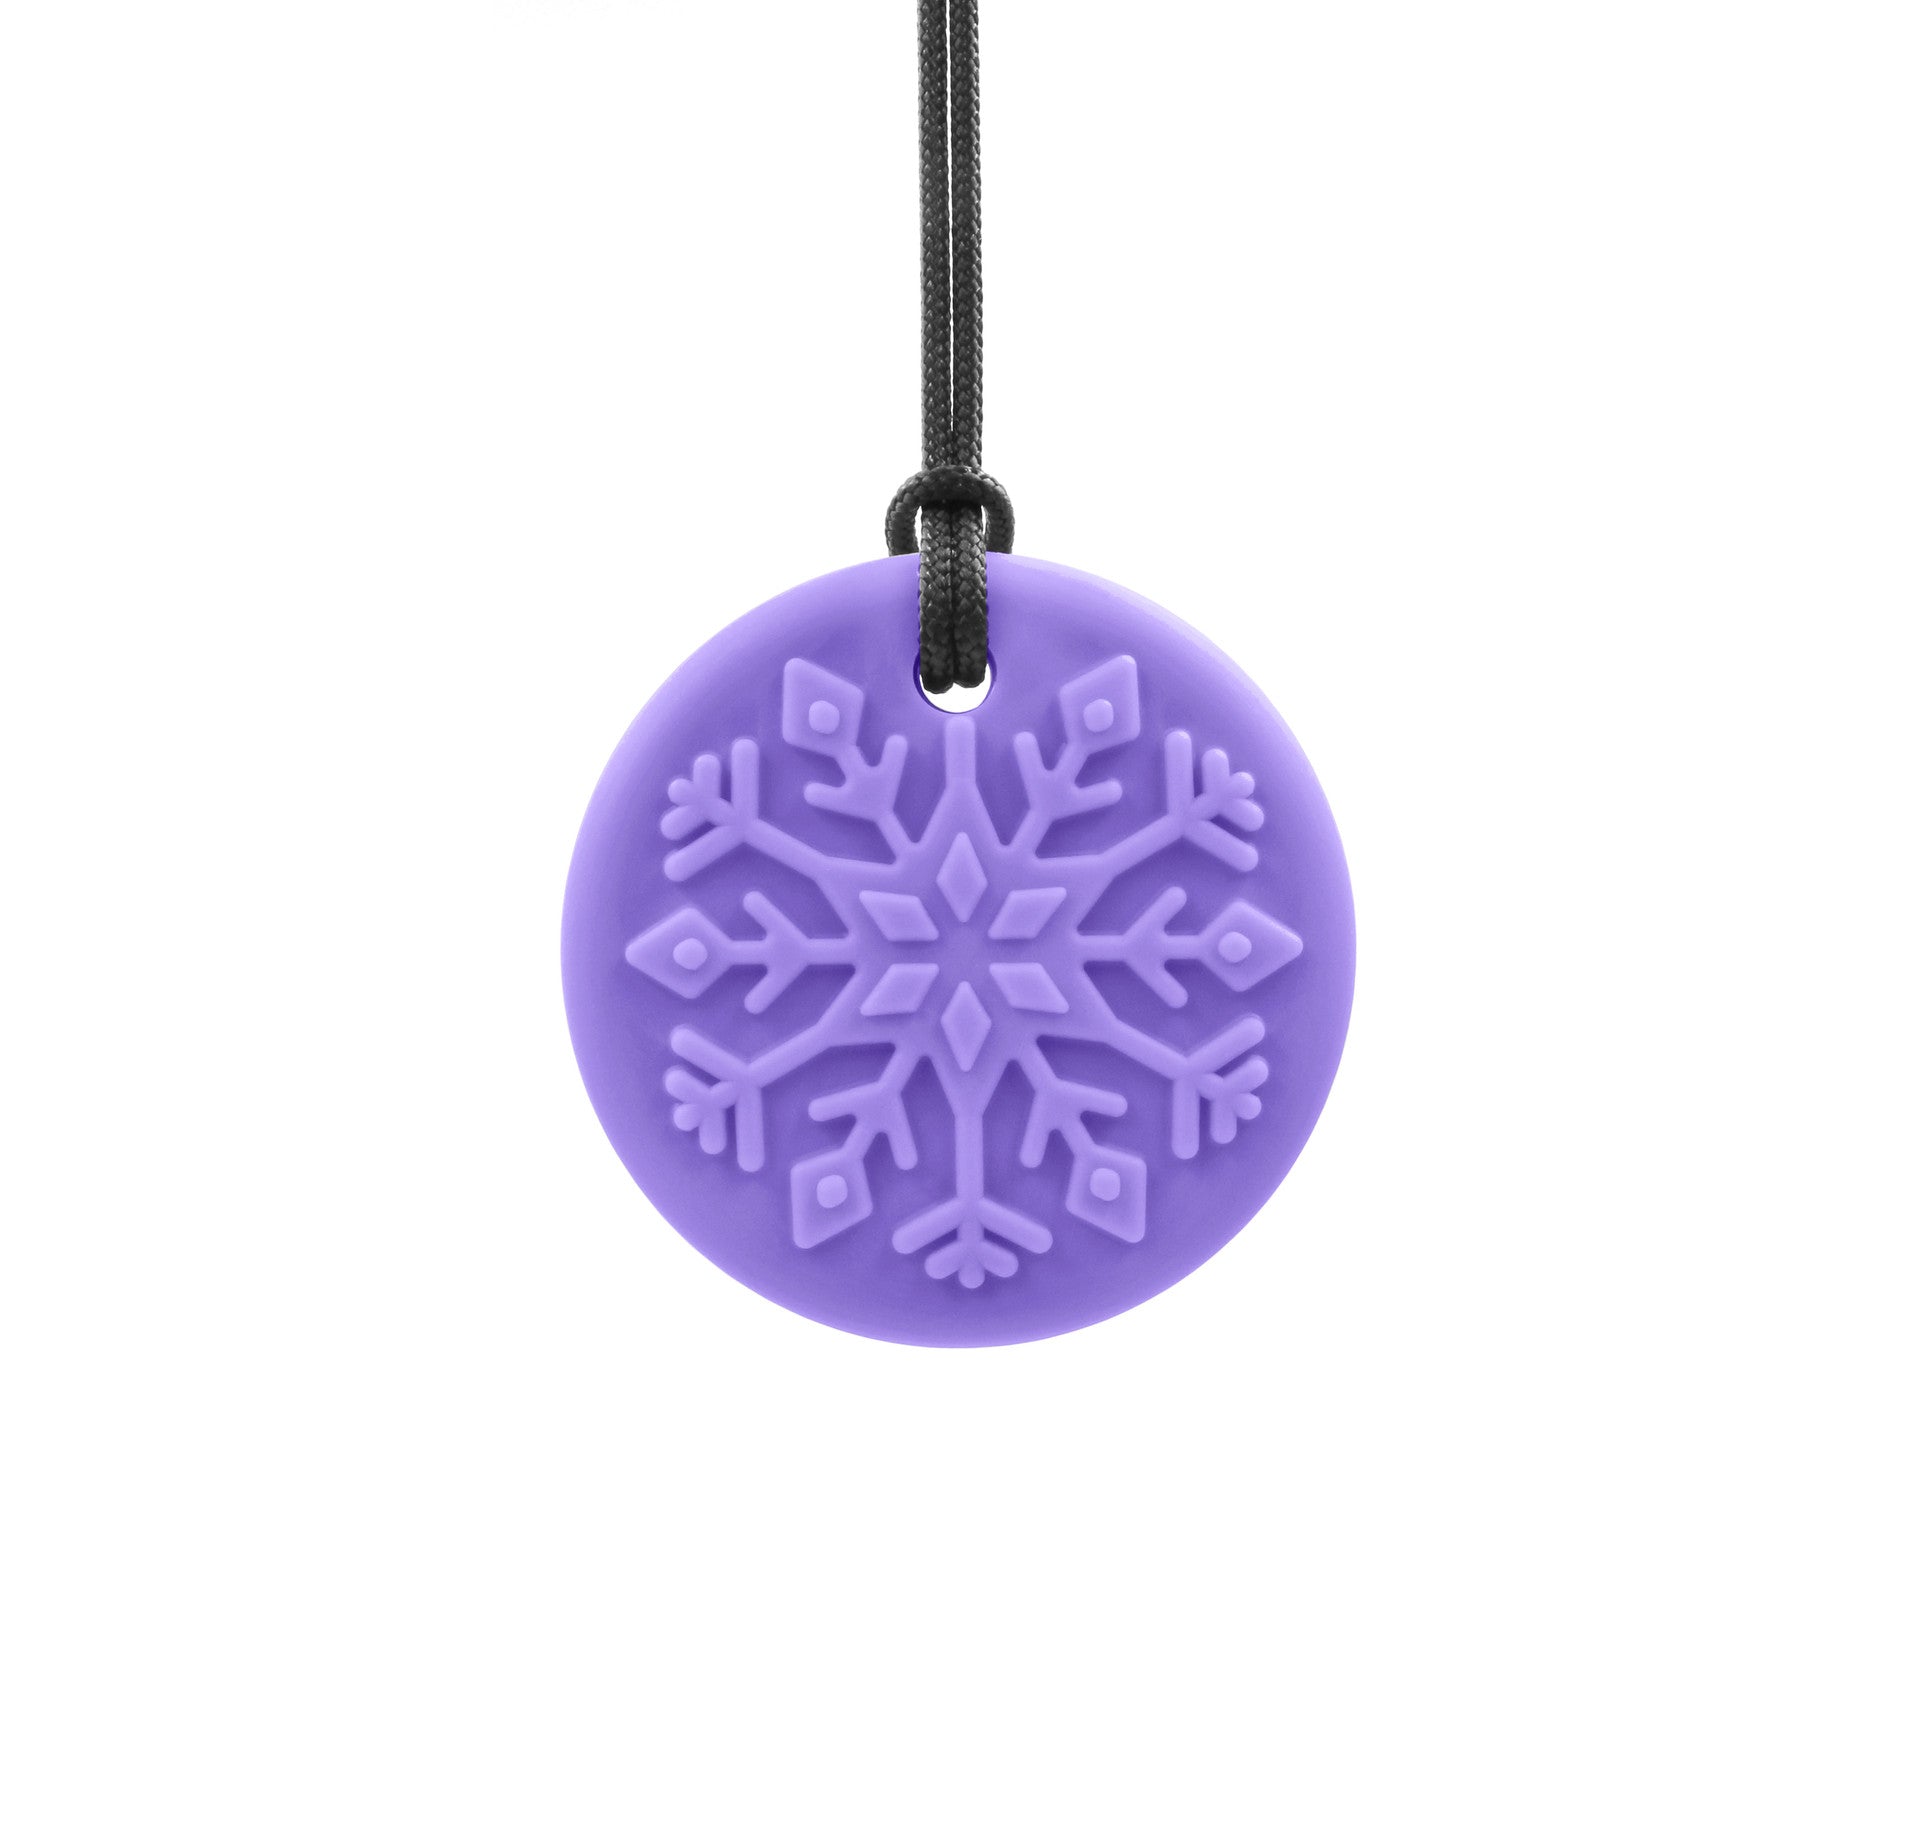 ARK's Blizzard Bite Snowflake Chewelry